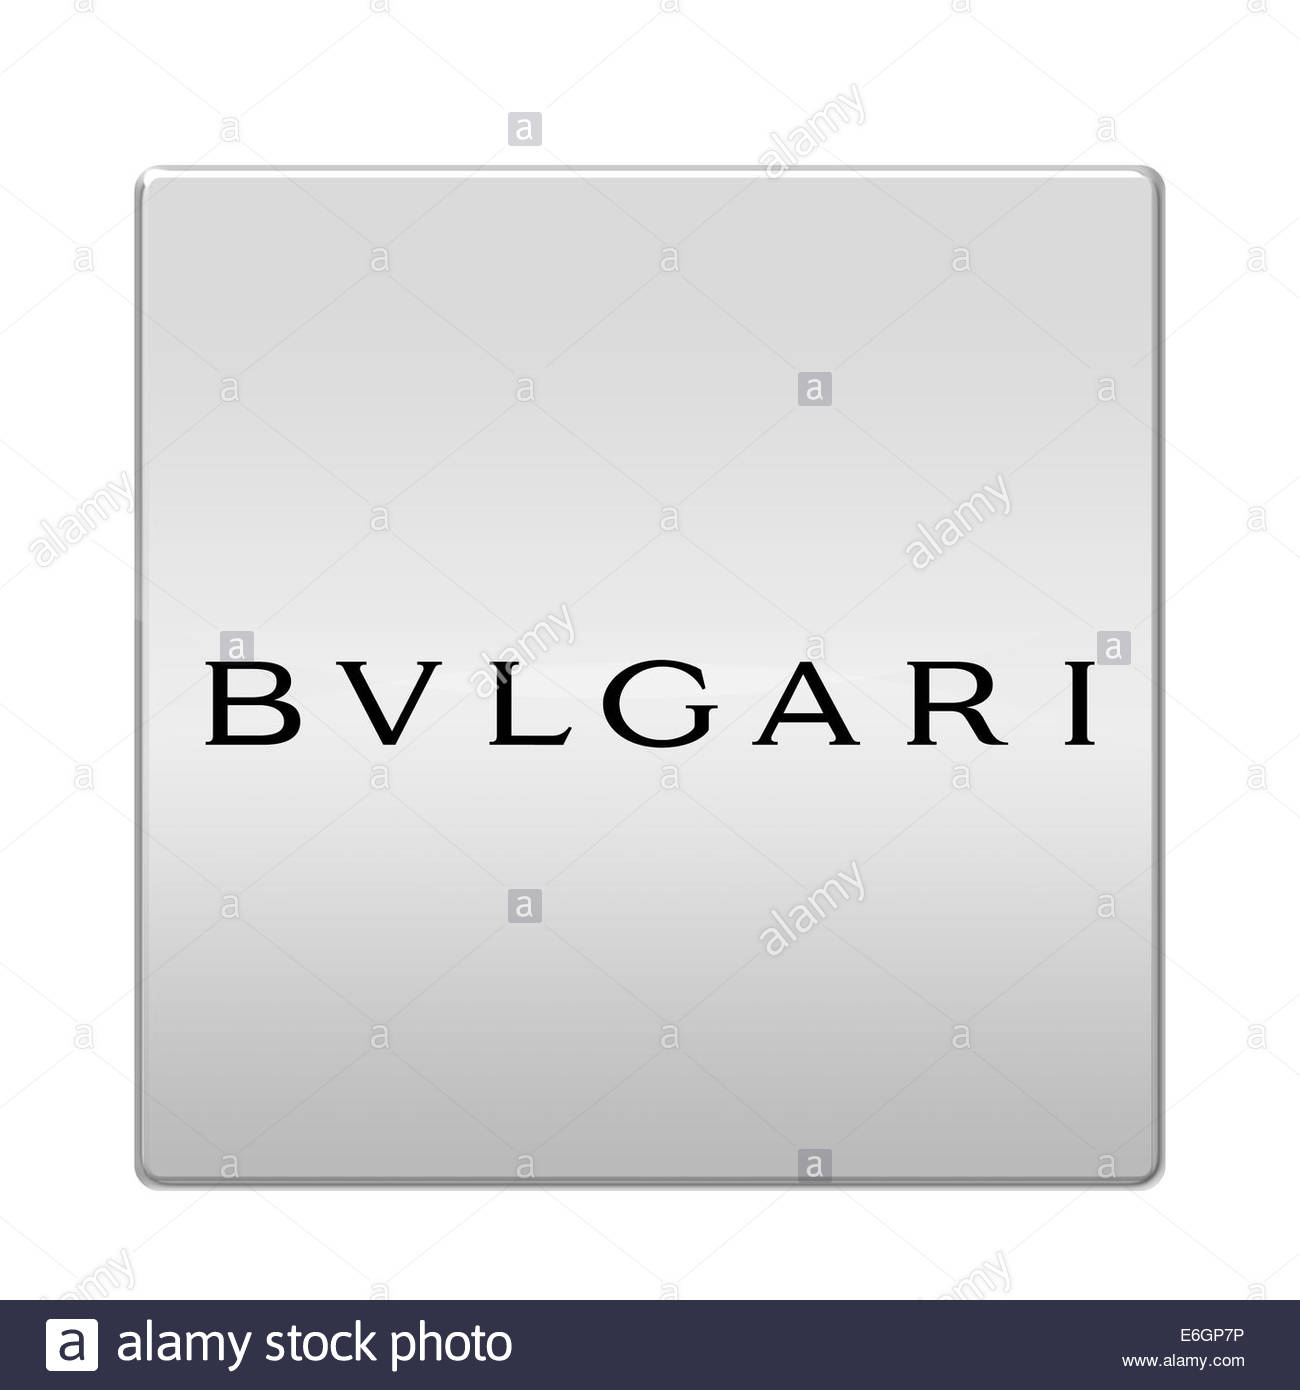 Bulgari Stock Photos & Bulgari Stock Images - Alamy